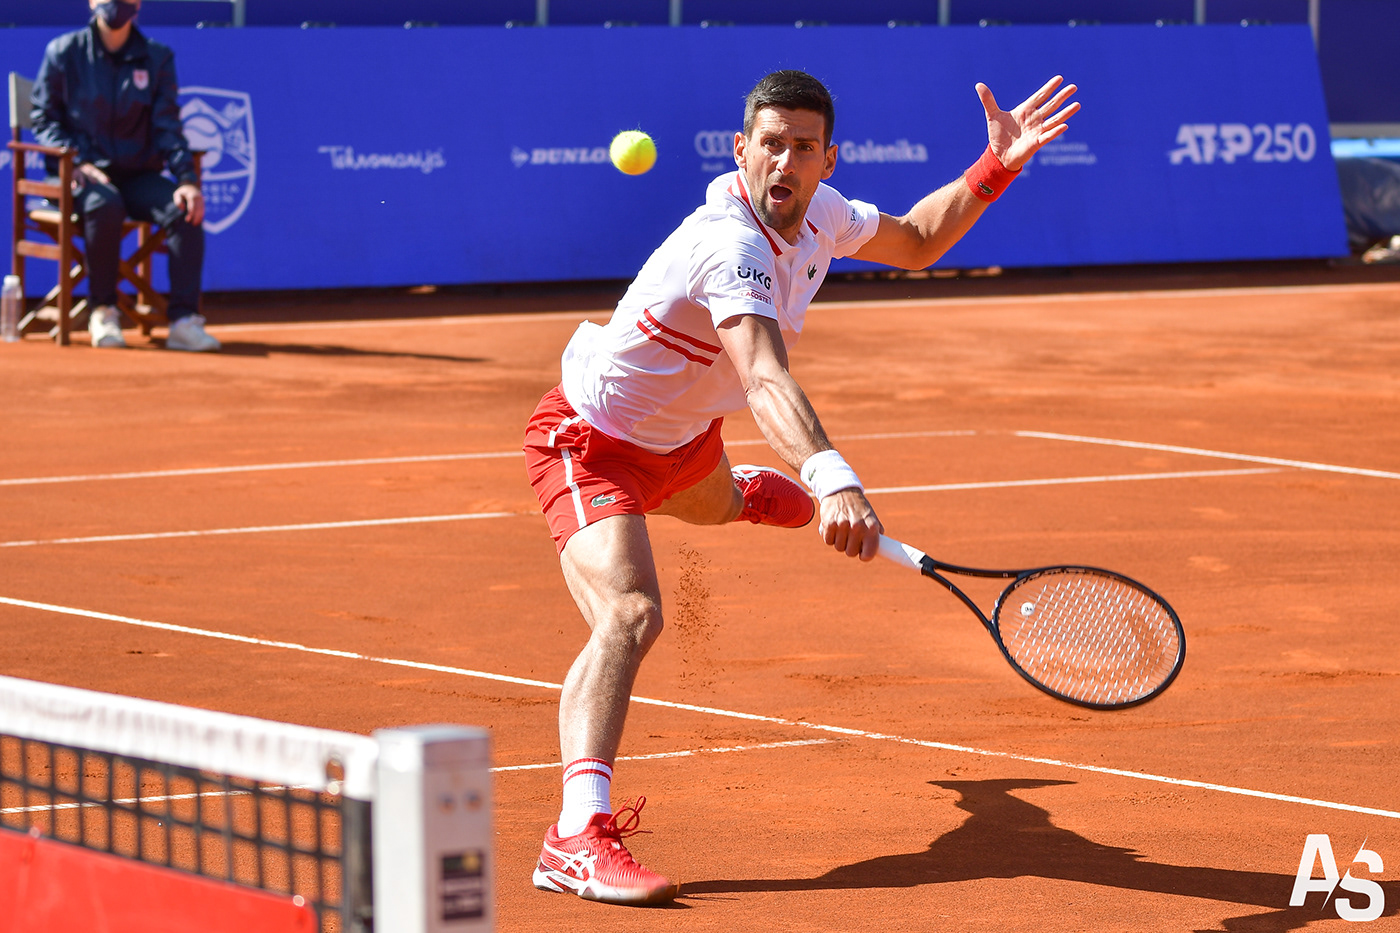 atp belgrade Novak Djokovic Serbia serbia open sports sports photography tennis